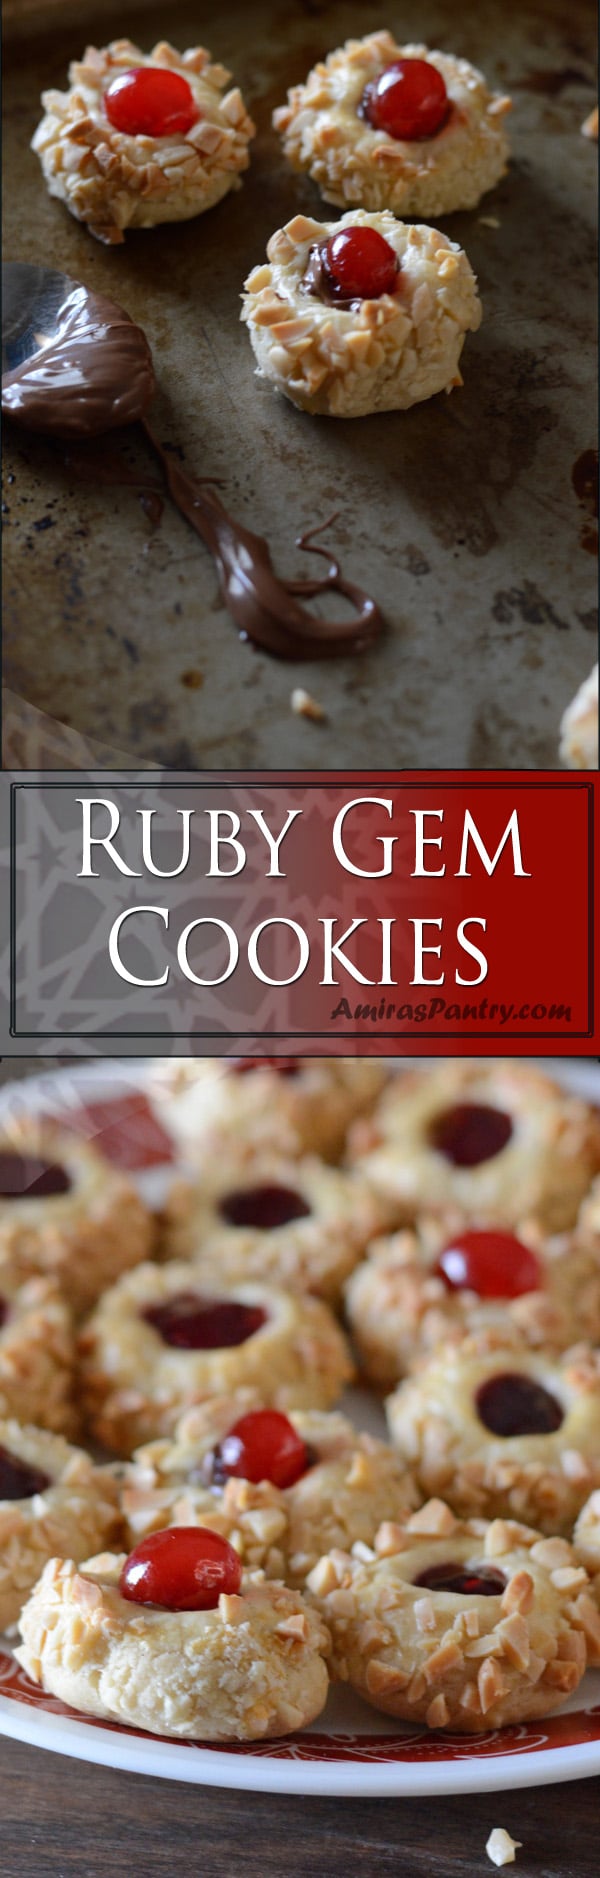 An infograph of Ruby Gem Cookies recipe